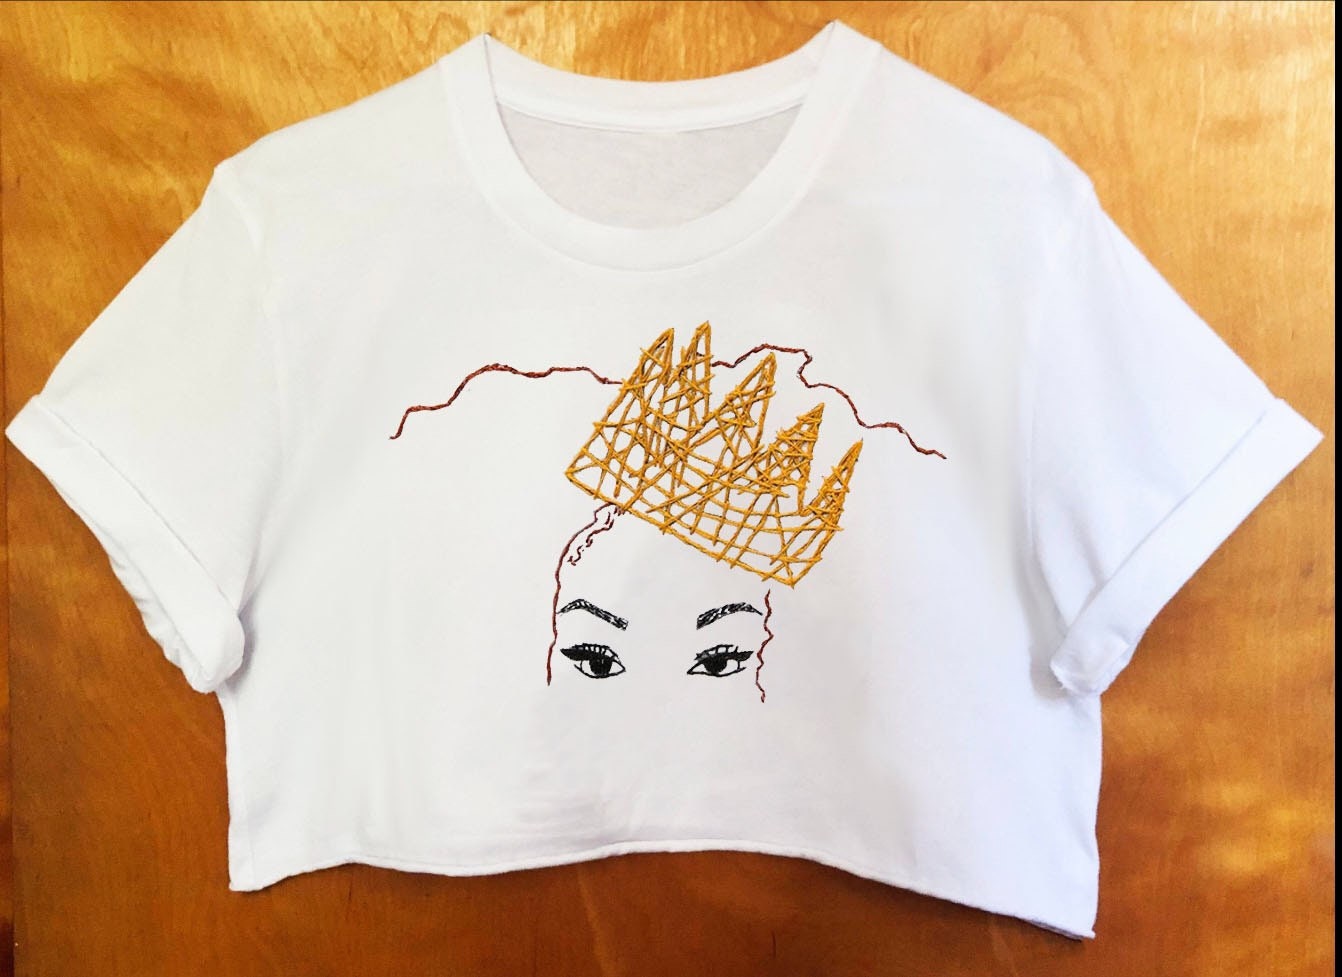 Queenin’ Hand Embroidered T-shirt, Black Female, Black Culture